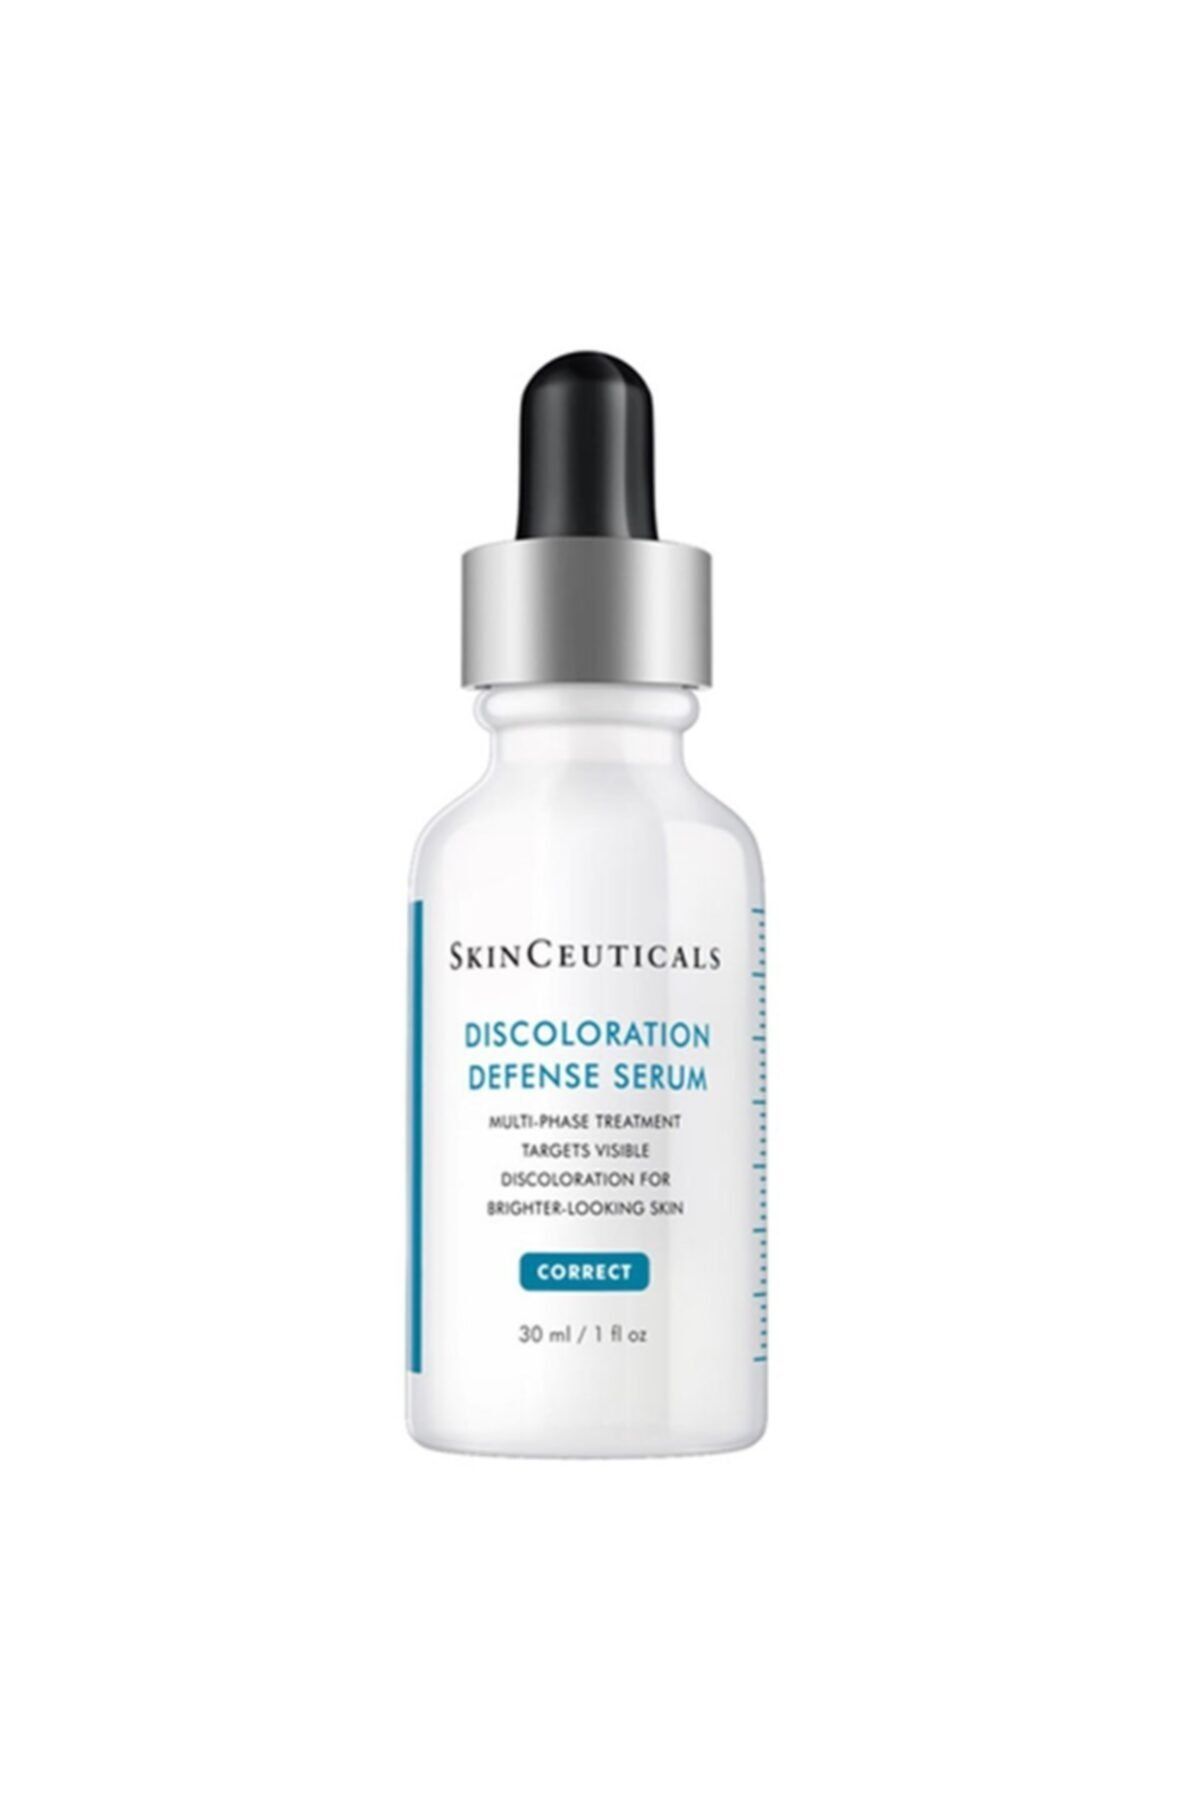 Skinceuticals Leke Karşıtı Discoloration Defense Serum Correct Cilt Bakım Serumu 30 ML,SkinCeuticals